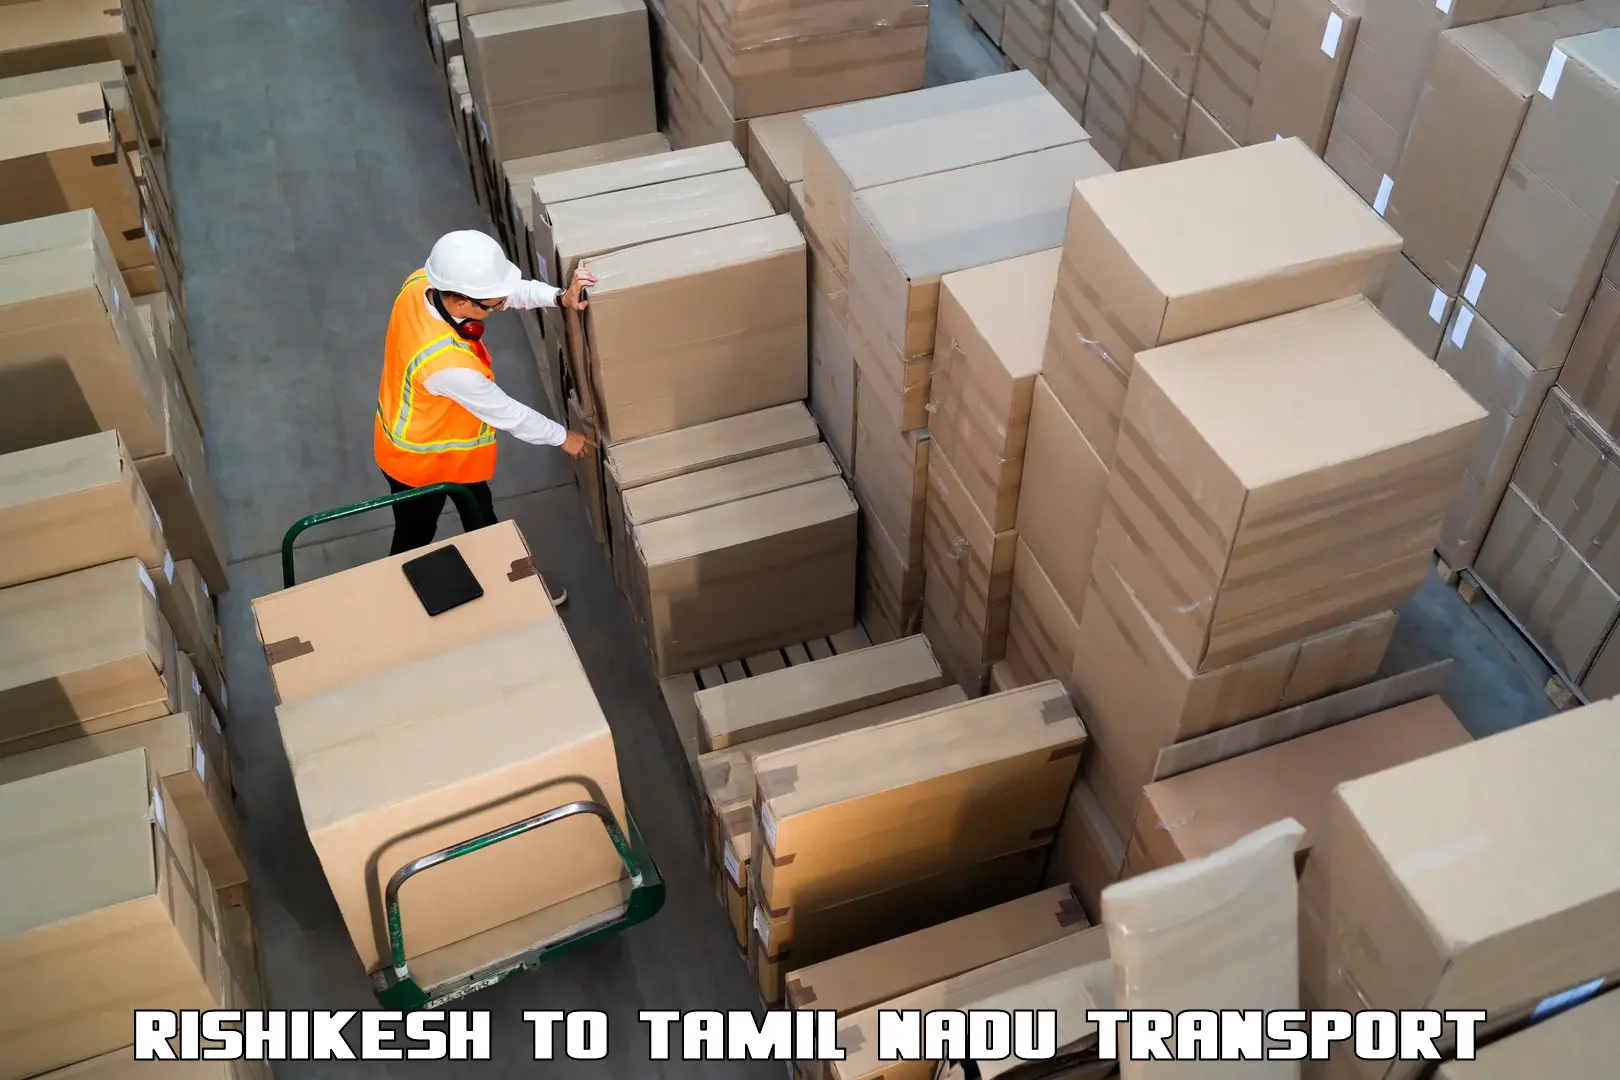 All India transport service Rishikesh to Chennai